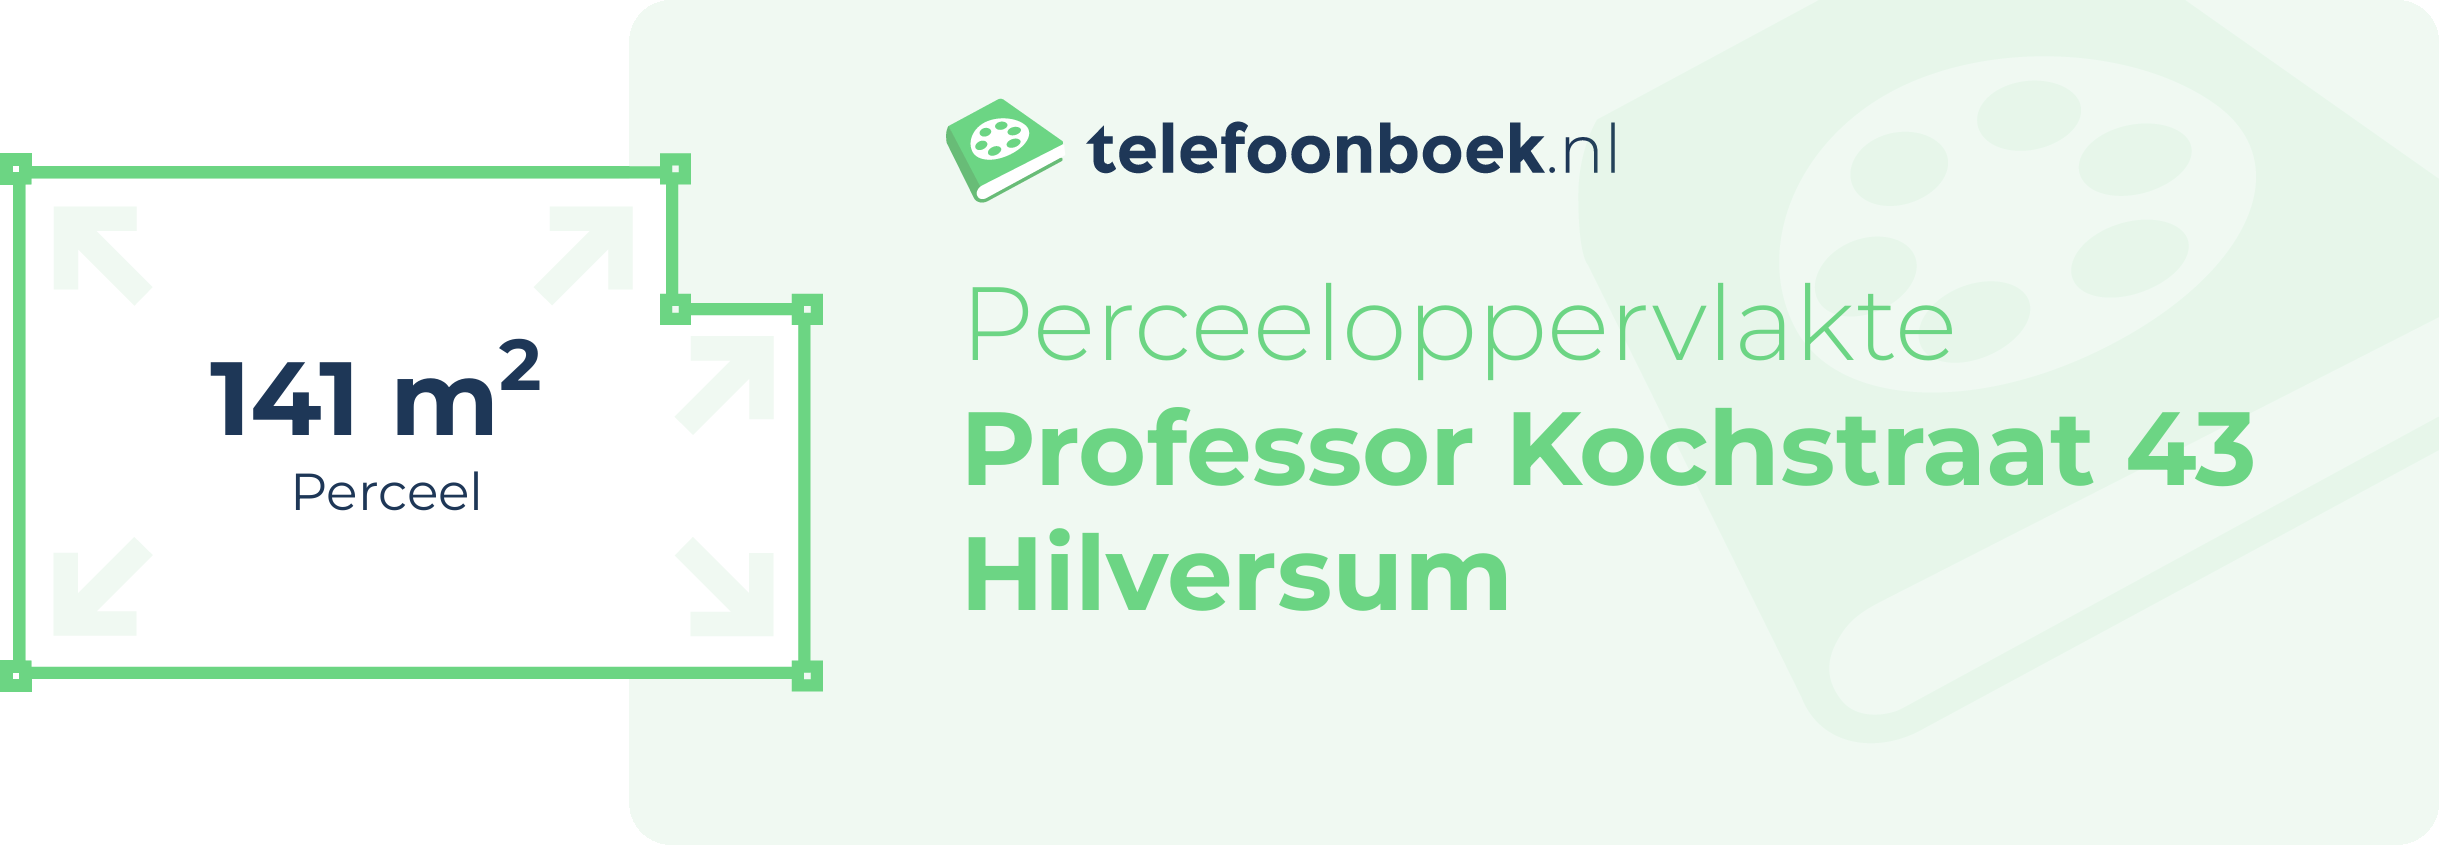 Perceeloppervlakte Professor Kochstraat 43 Hilversum